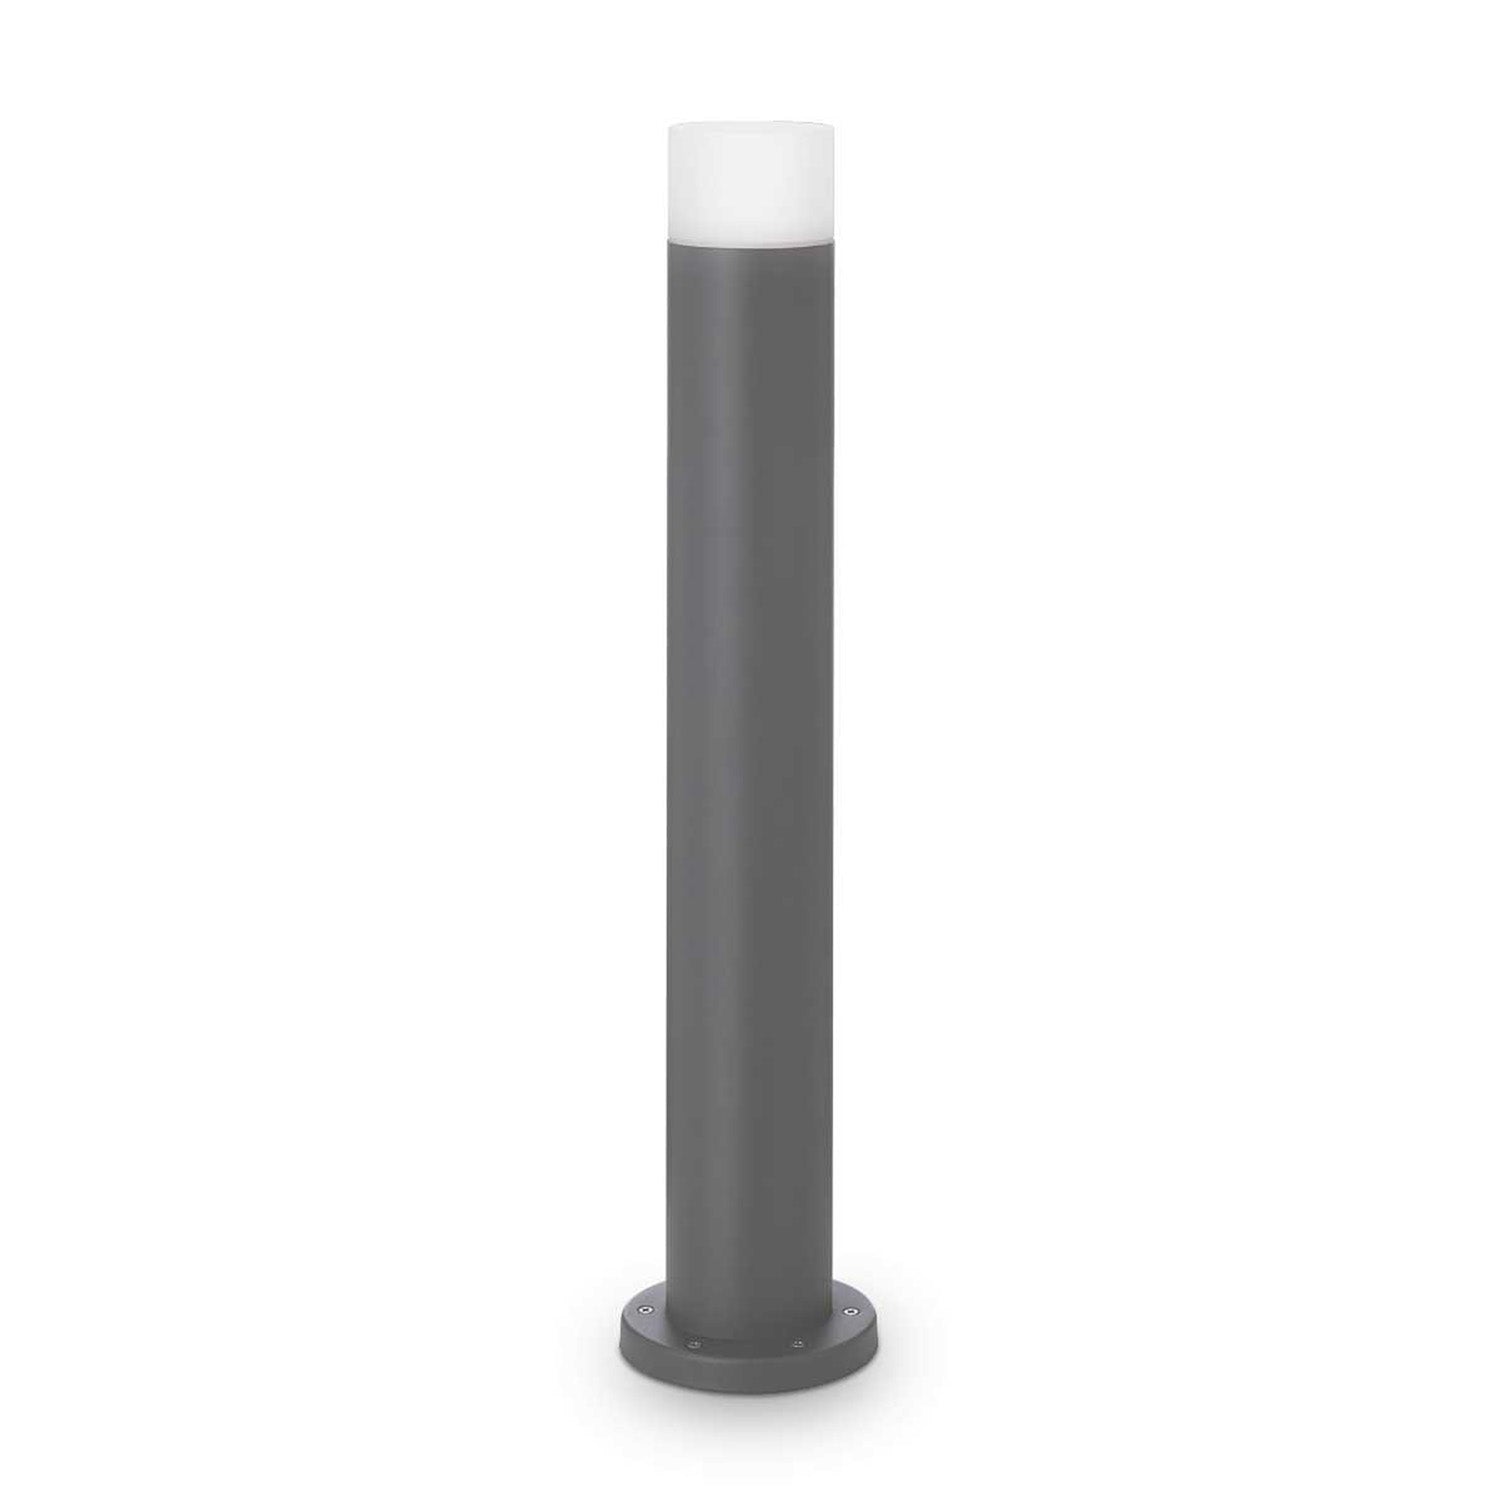 VENUS - Outdoor bollard light in anthracite gray steel